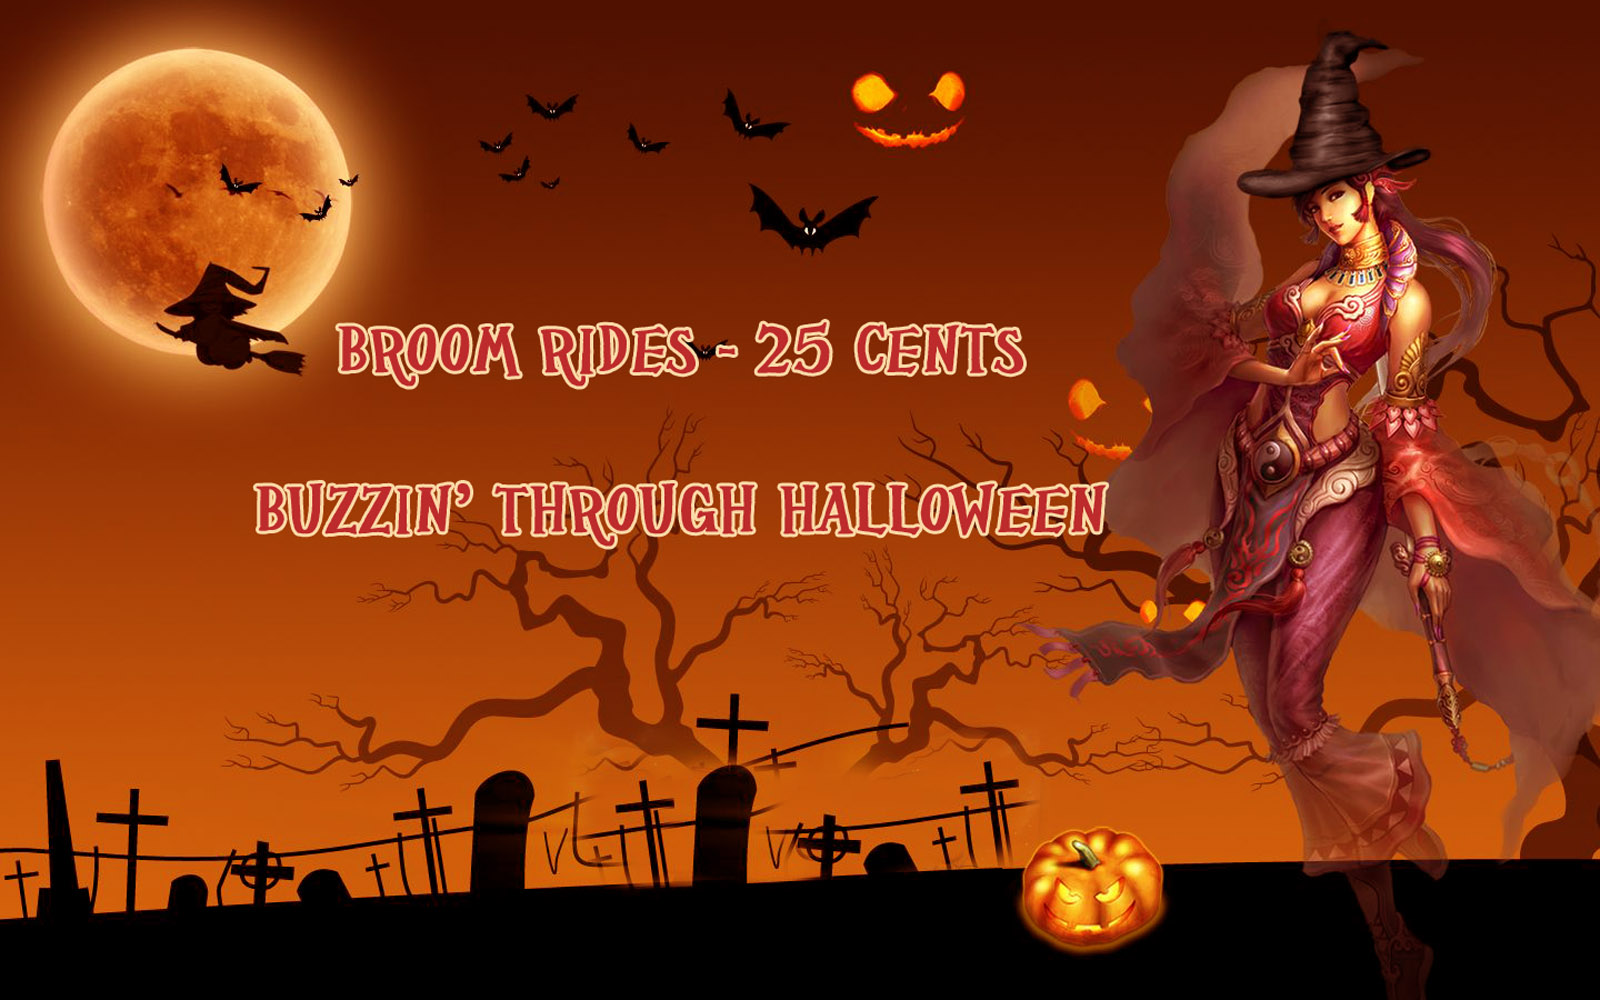 2014 Halloween Greeting Invitation Cards Hot Spooky Freaky